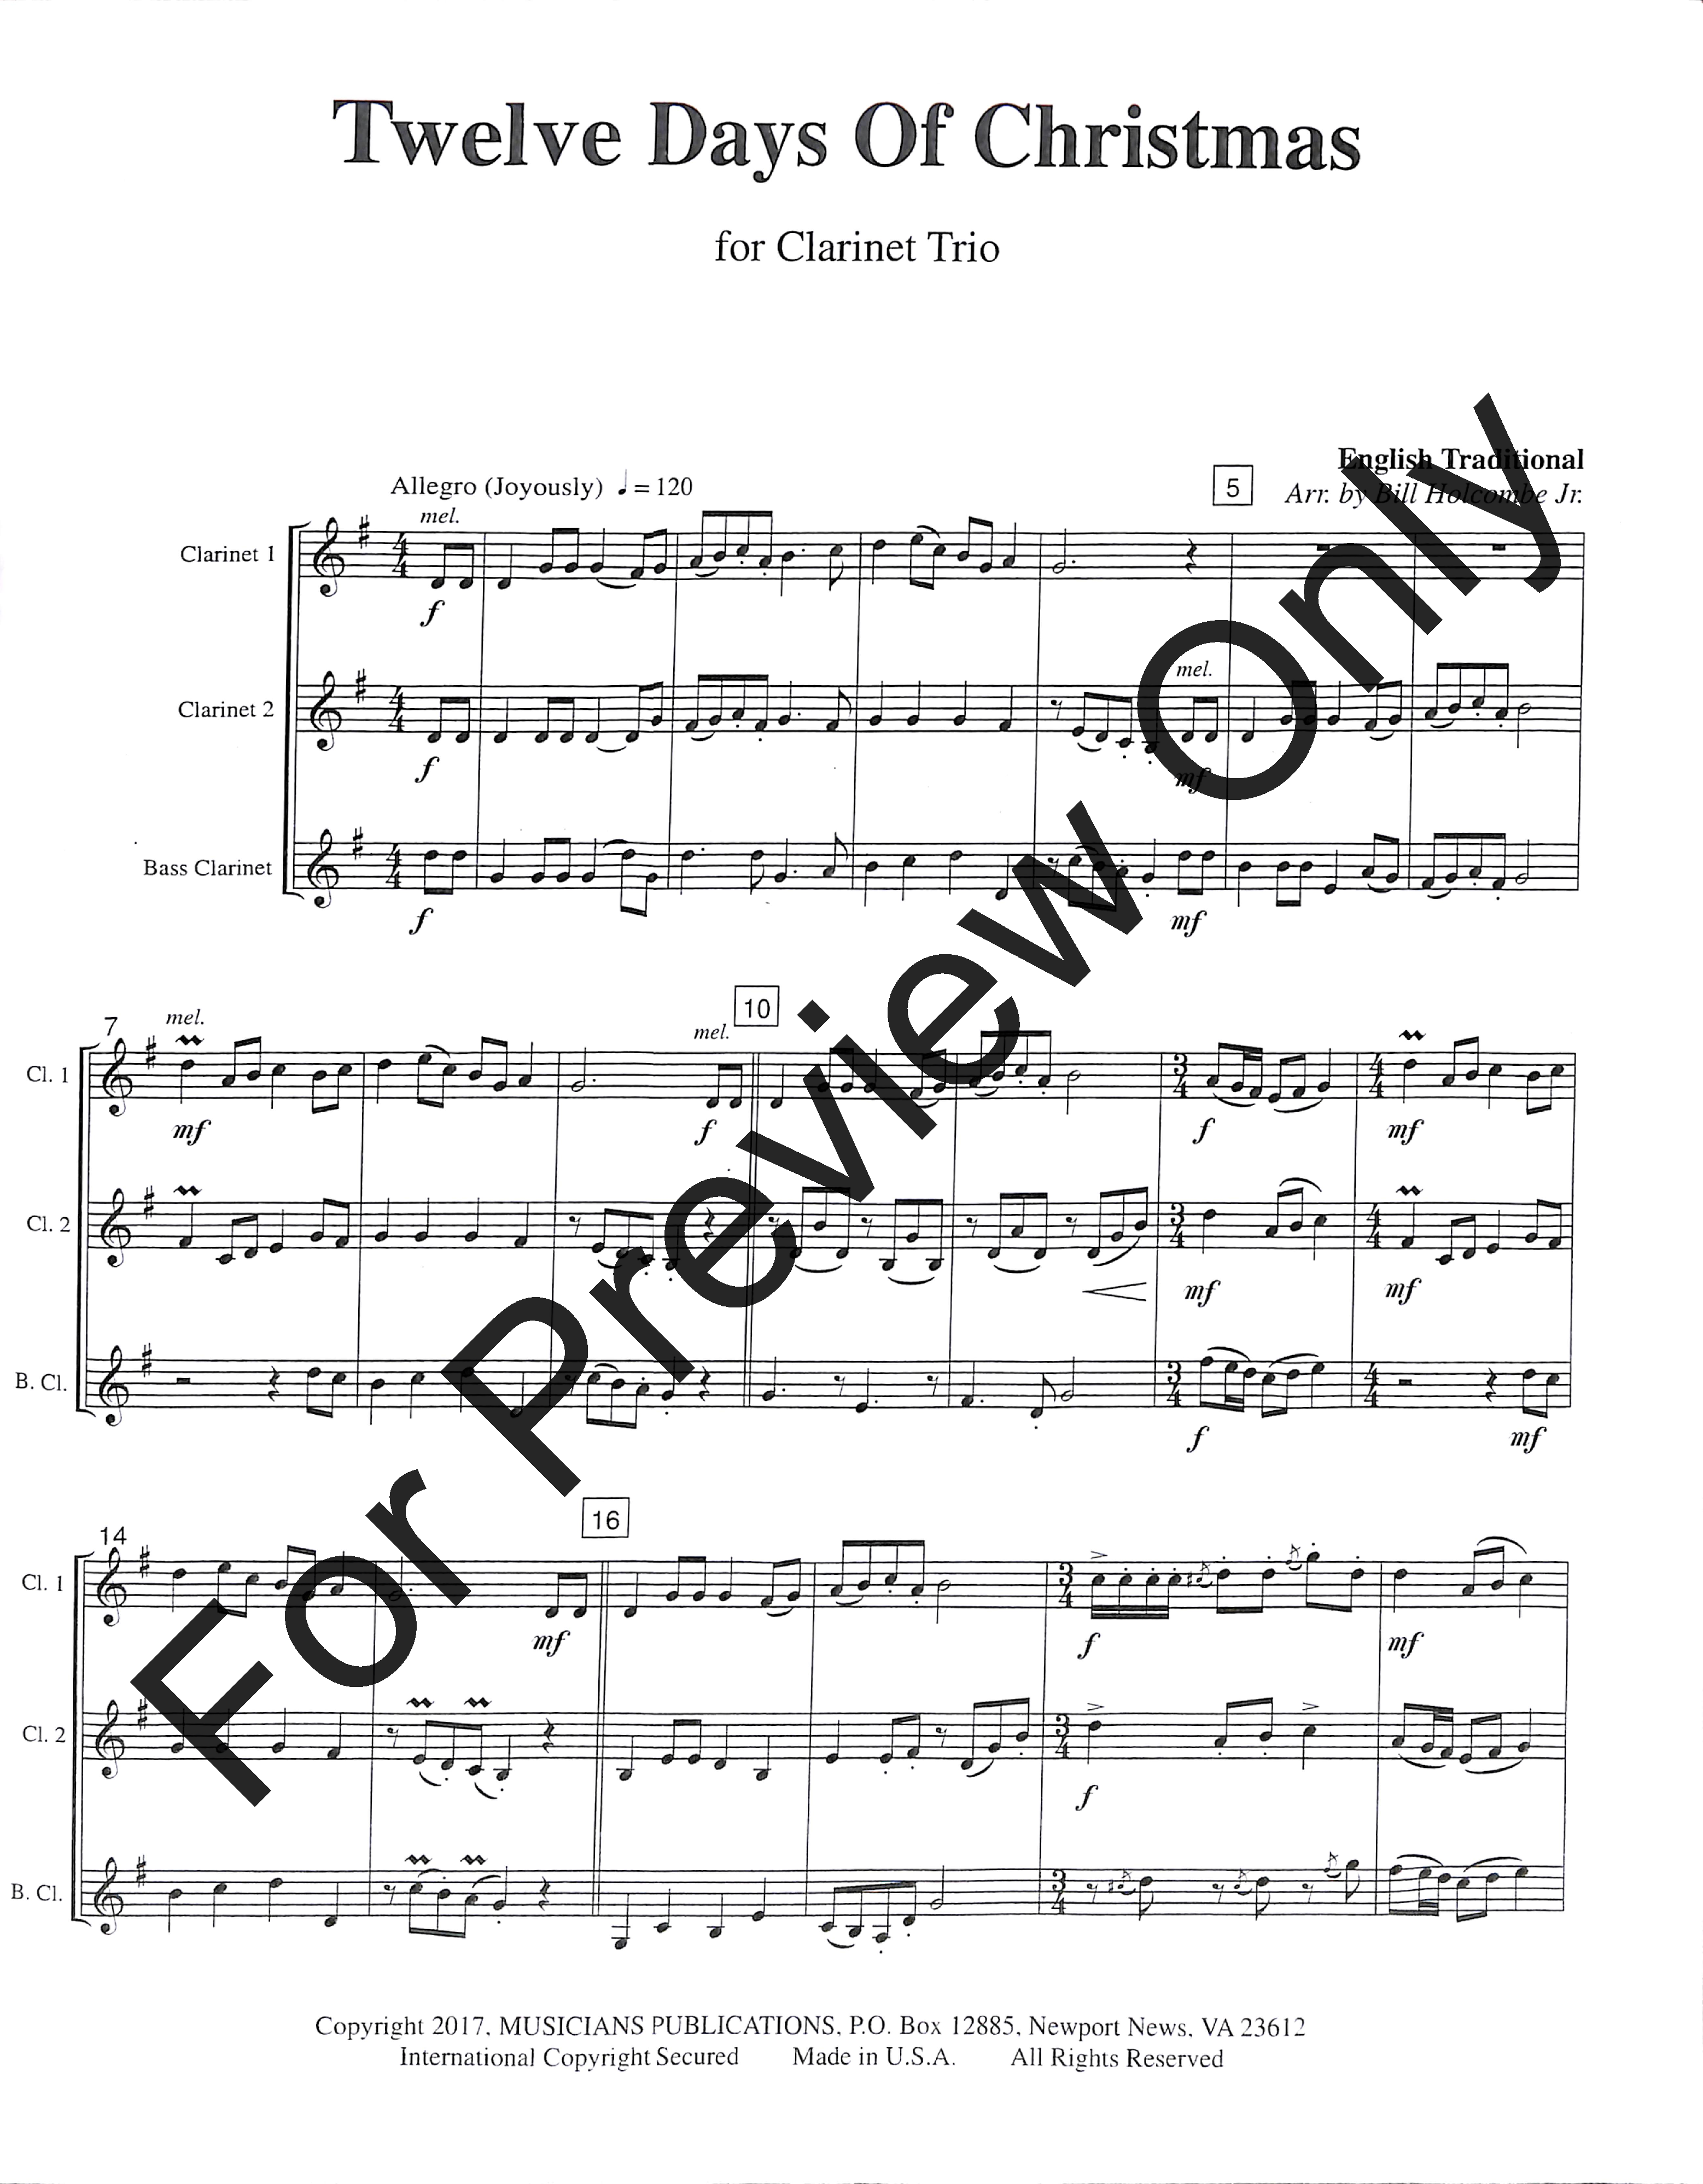 The Twelve Days of Christmas Clarinet Trio - opt. bass clarinet part